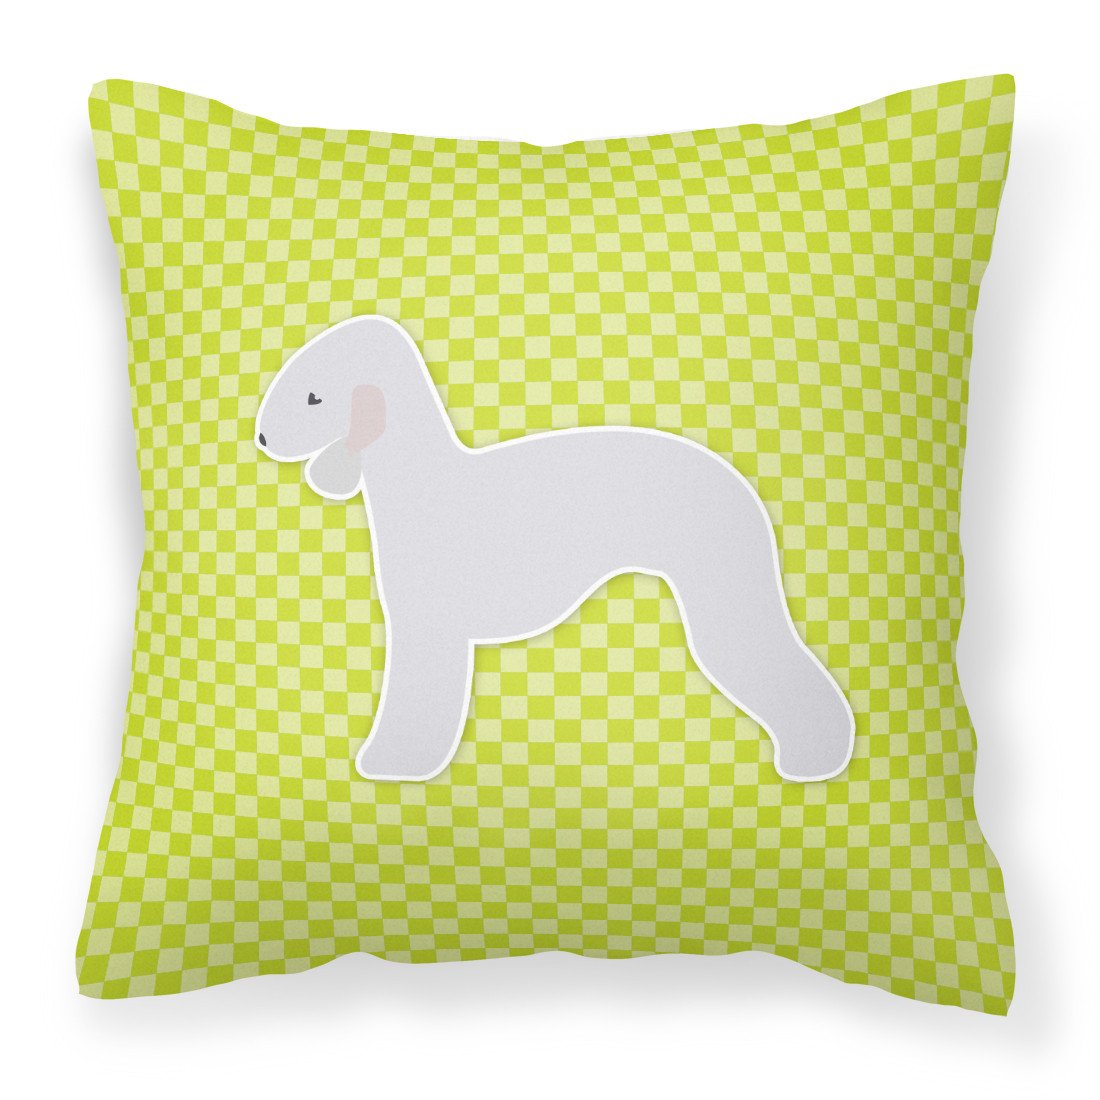 Bedlington Terrier Checkerboard Green Fabric Decorative Pillow BB3794PW1818 by Caroline's Treasures